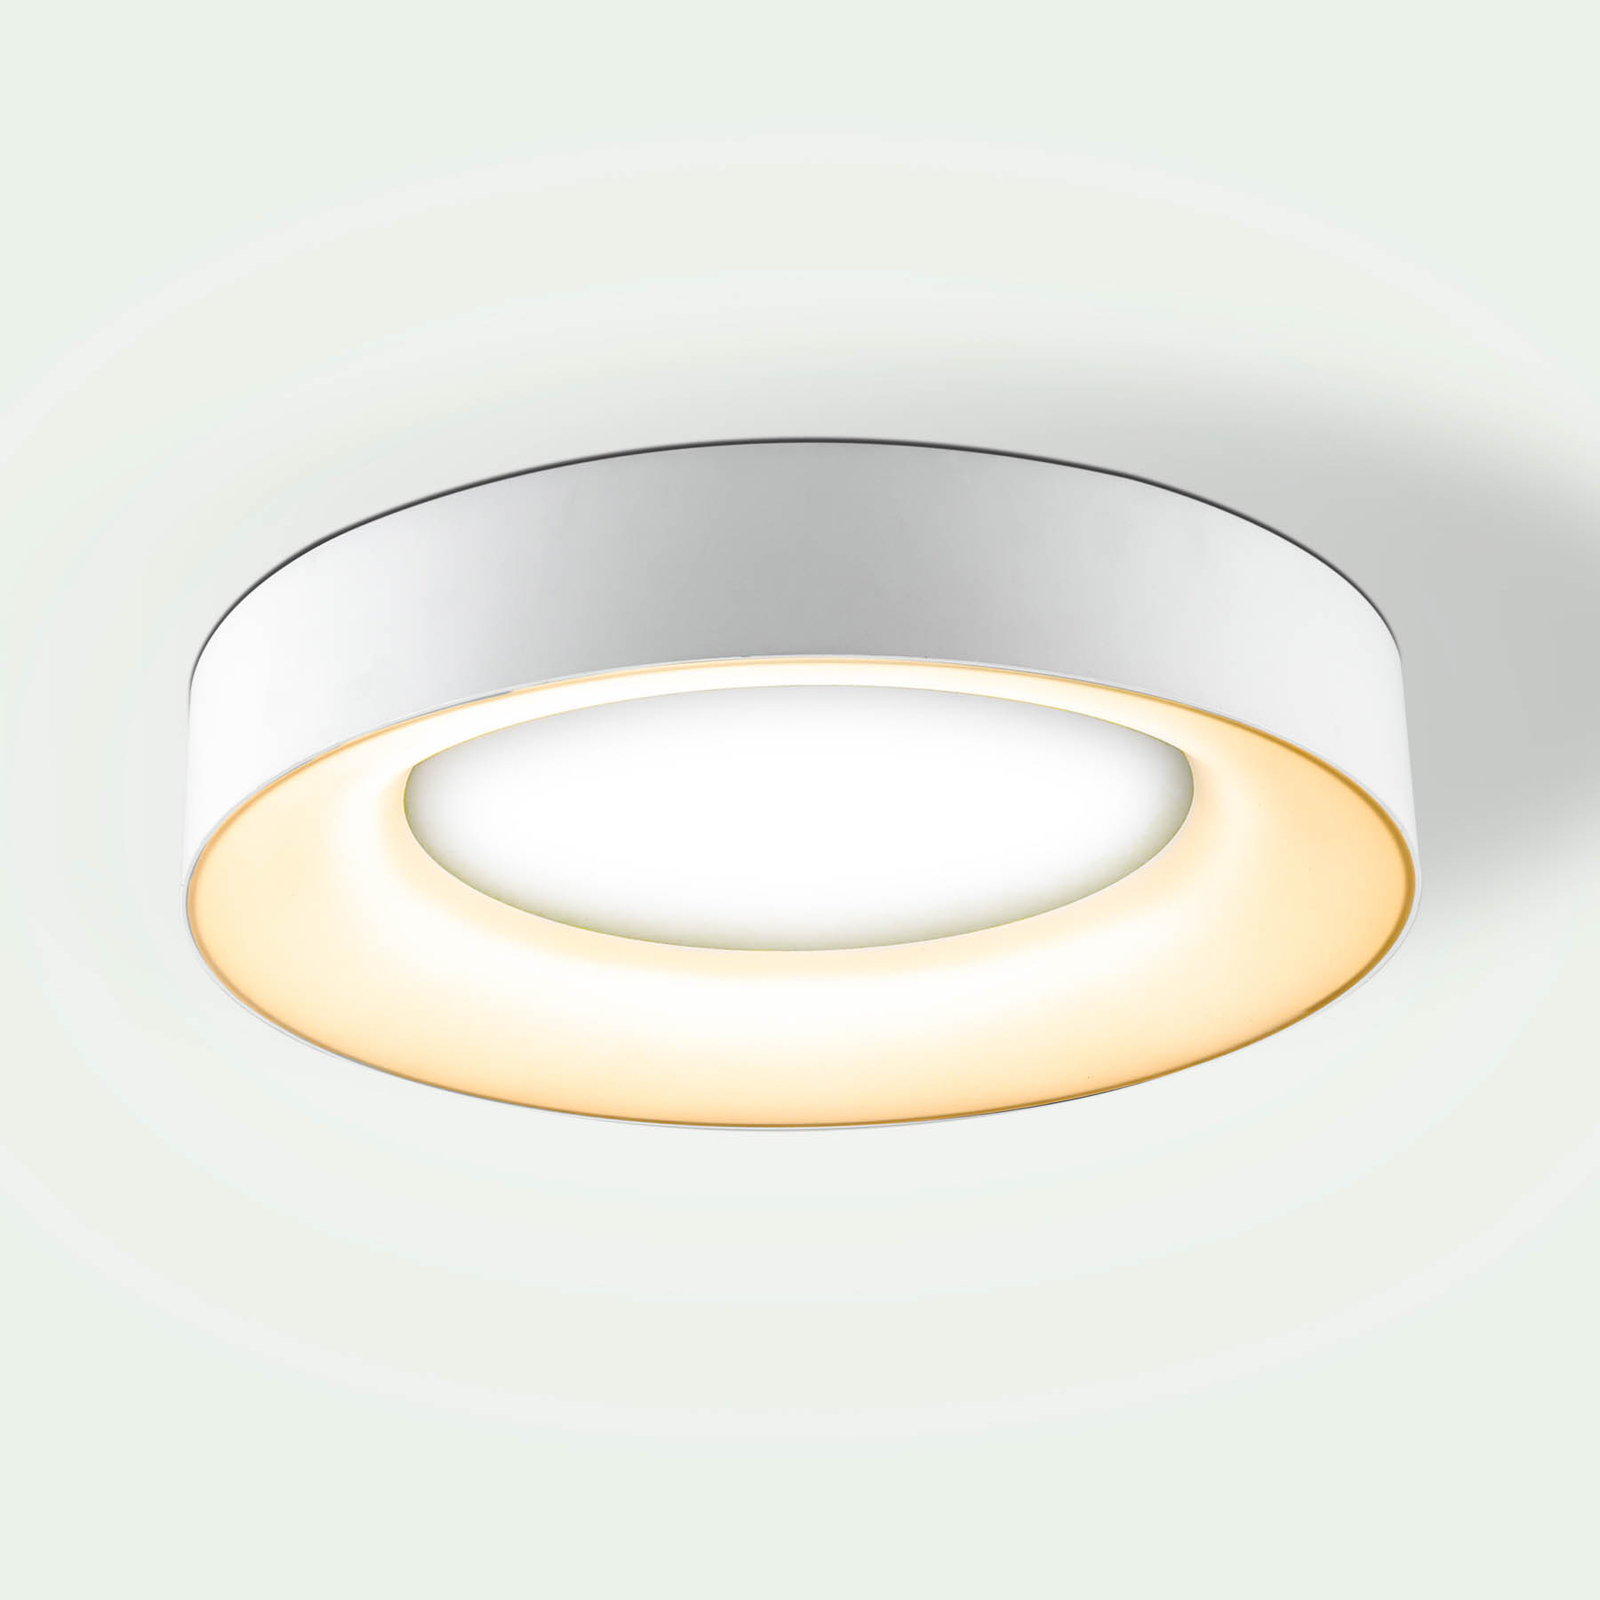 Sauro LED plafondlamp, Ø 40 cm, wit